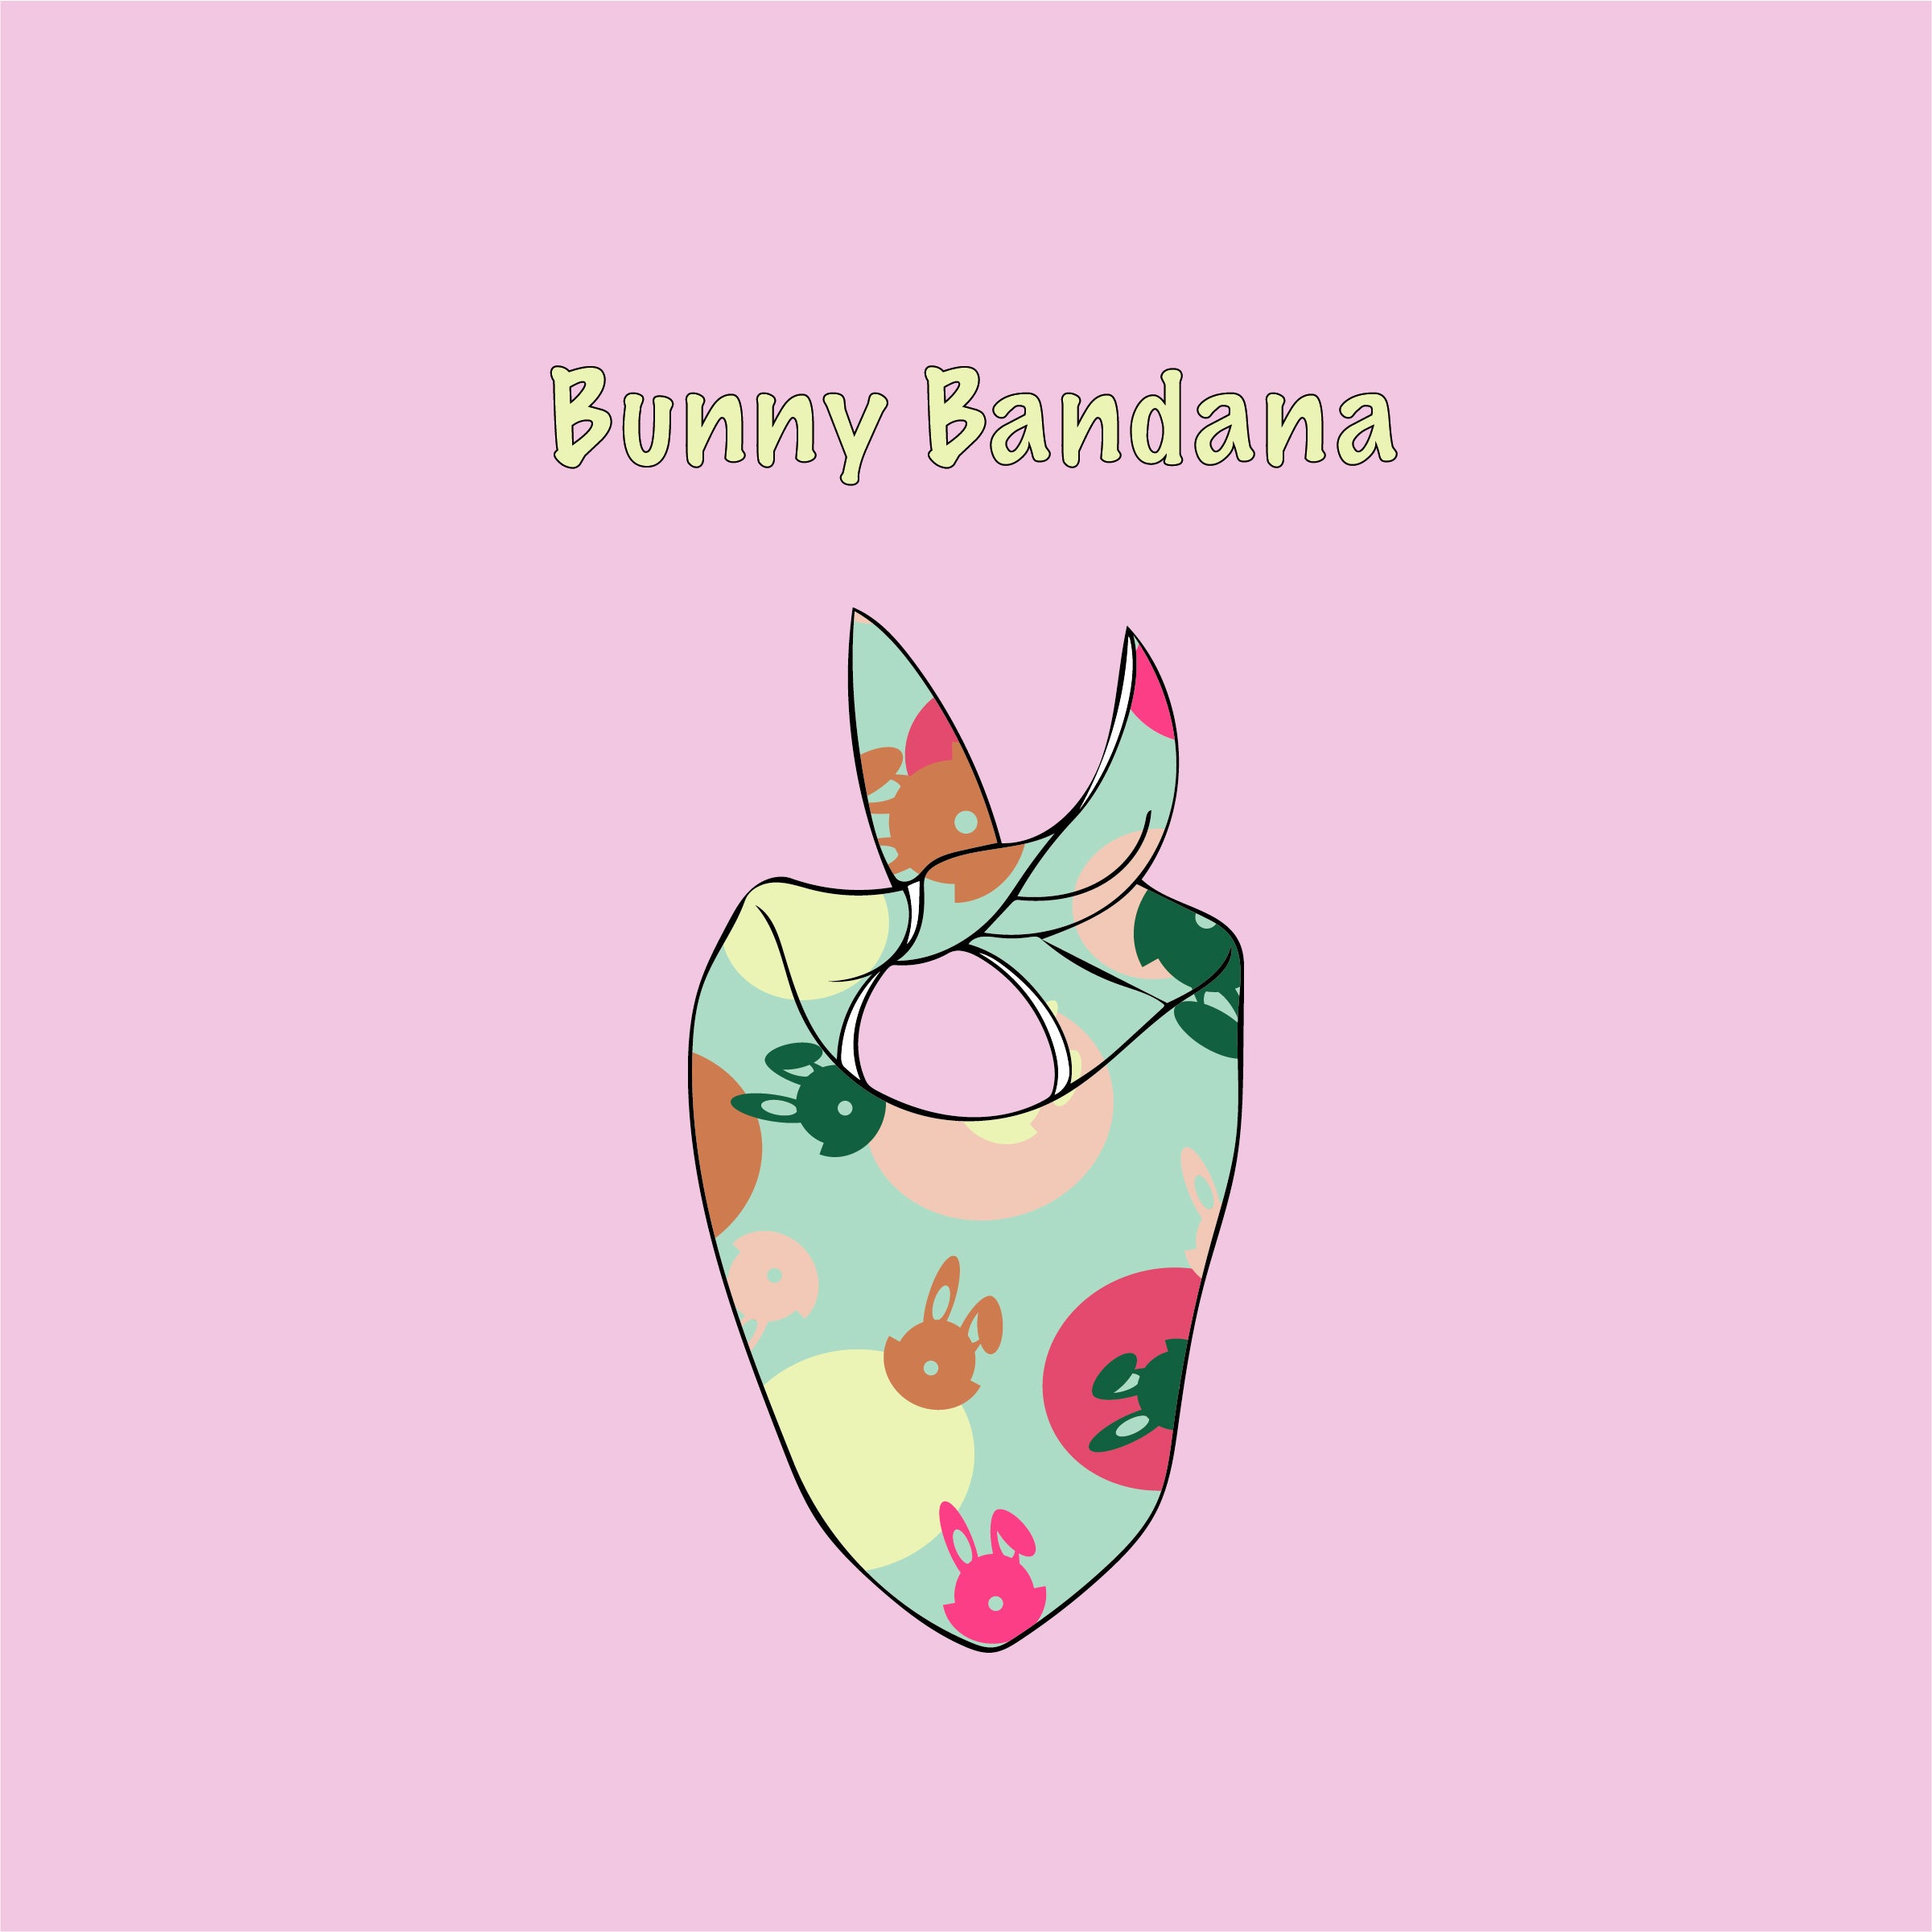 Bunny Bandana